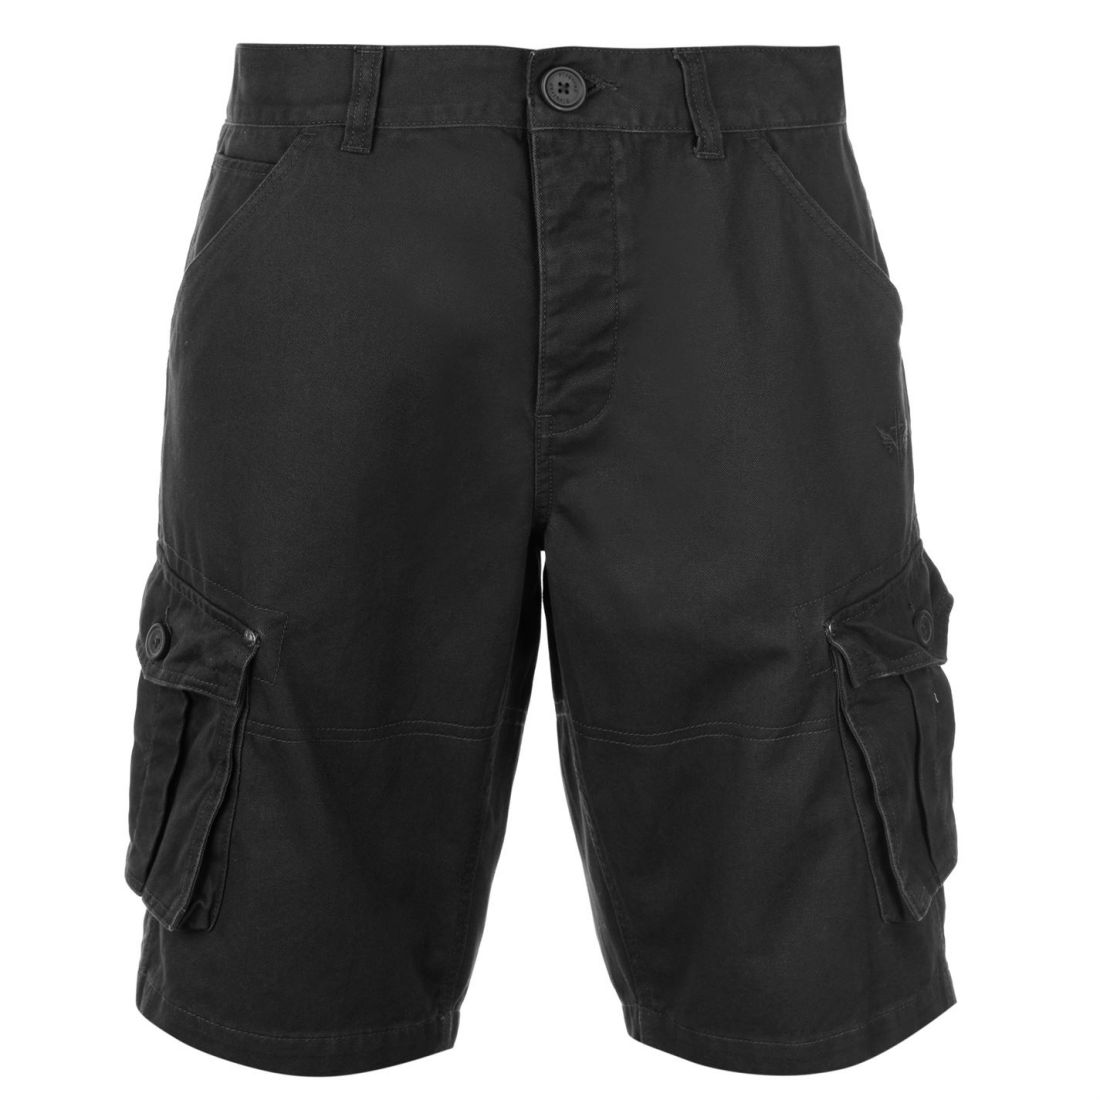 Mens Firetrap Below The Knee Shorts Cargo Cotton New | eBay